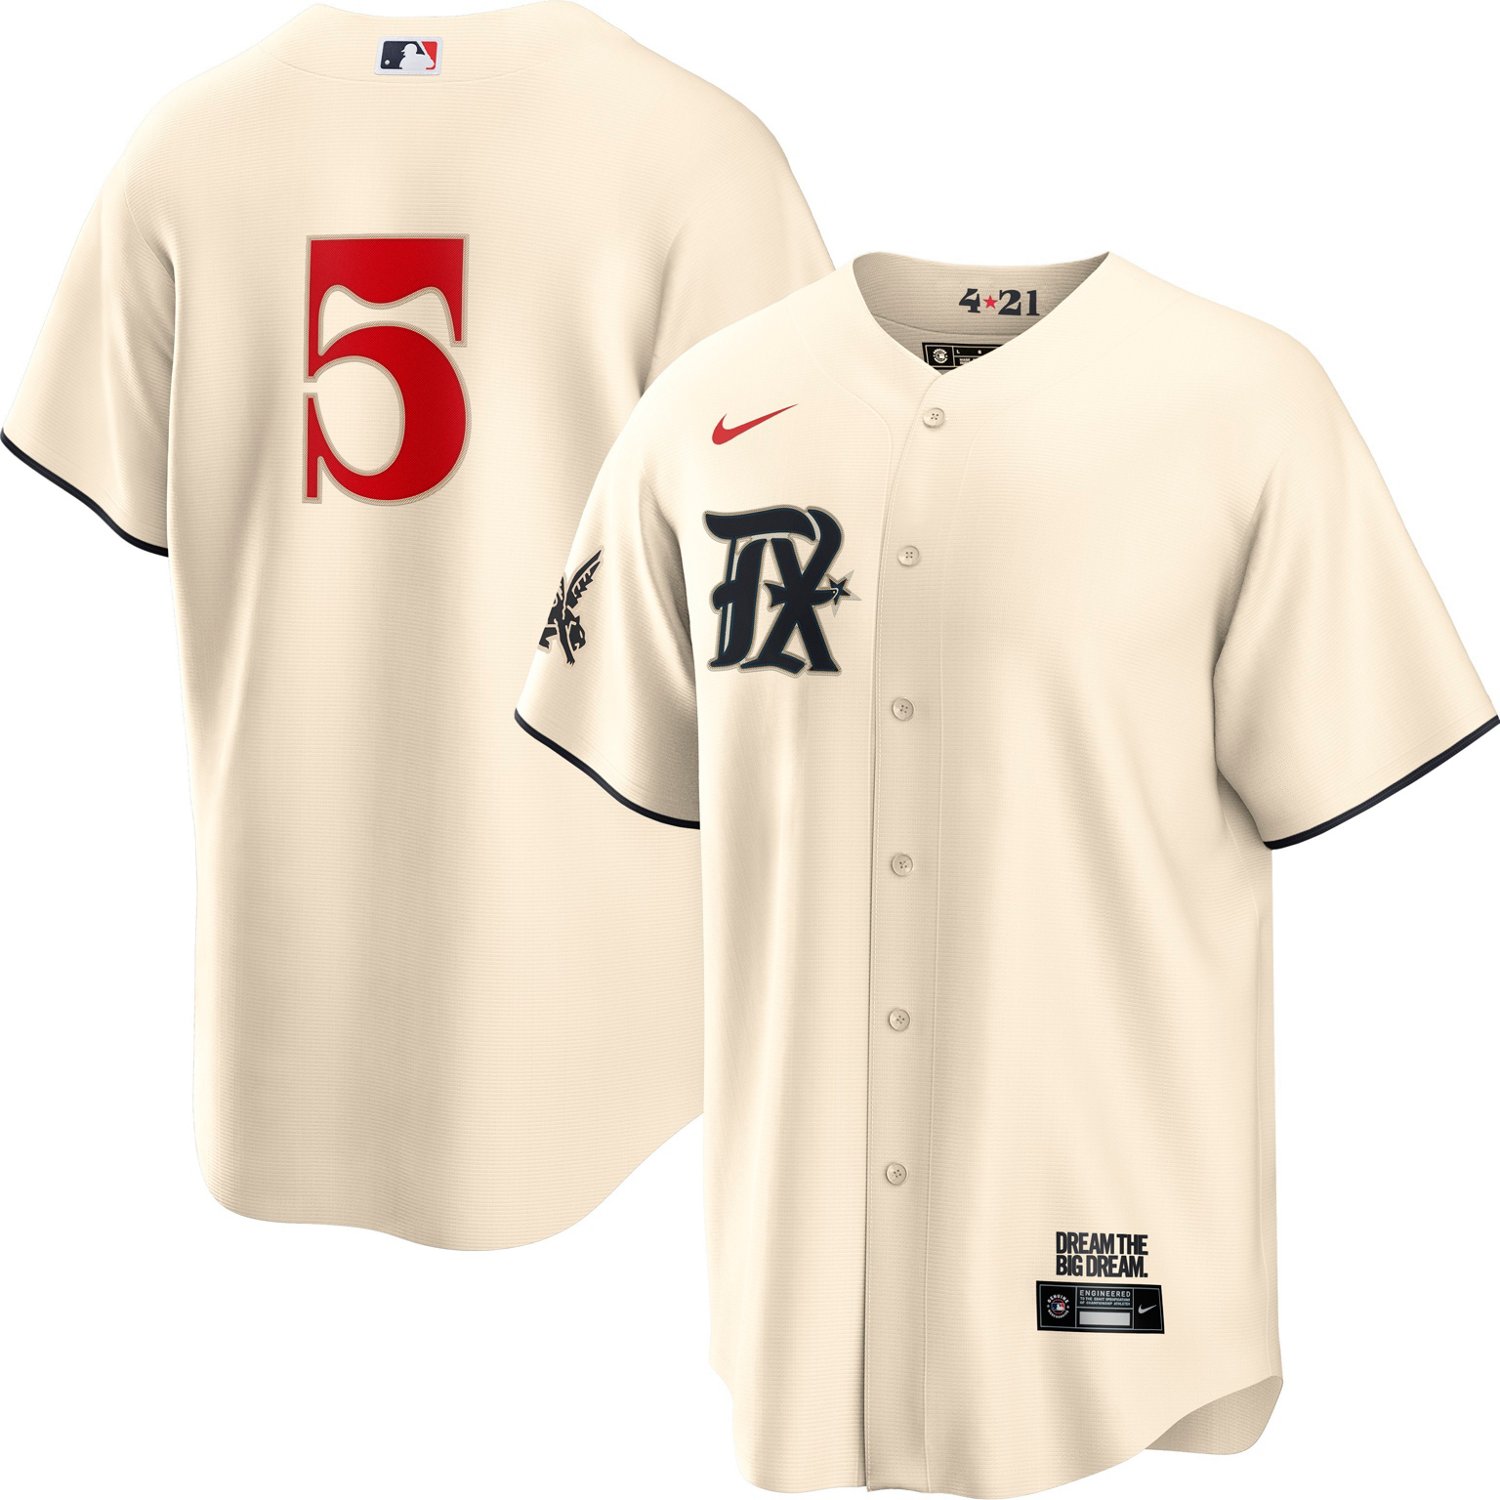 Lids Texas Rangers Nike Youth Home Replica Custom Jersey - White